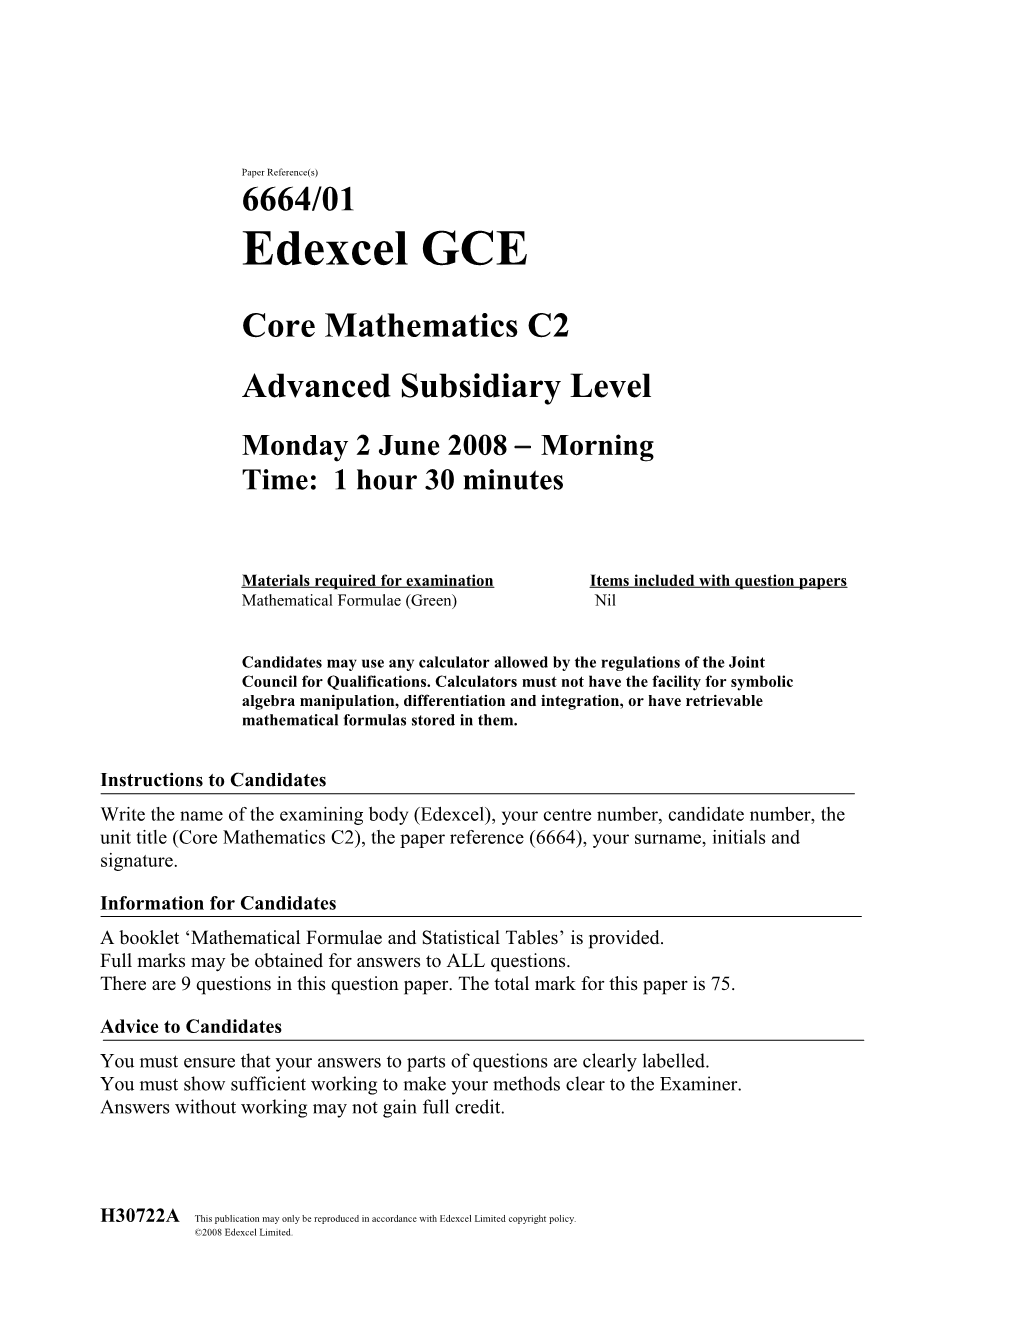 Core Mathematics C2